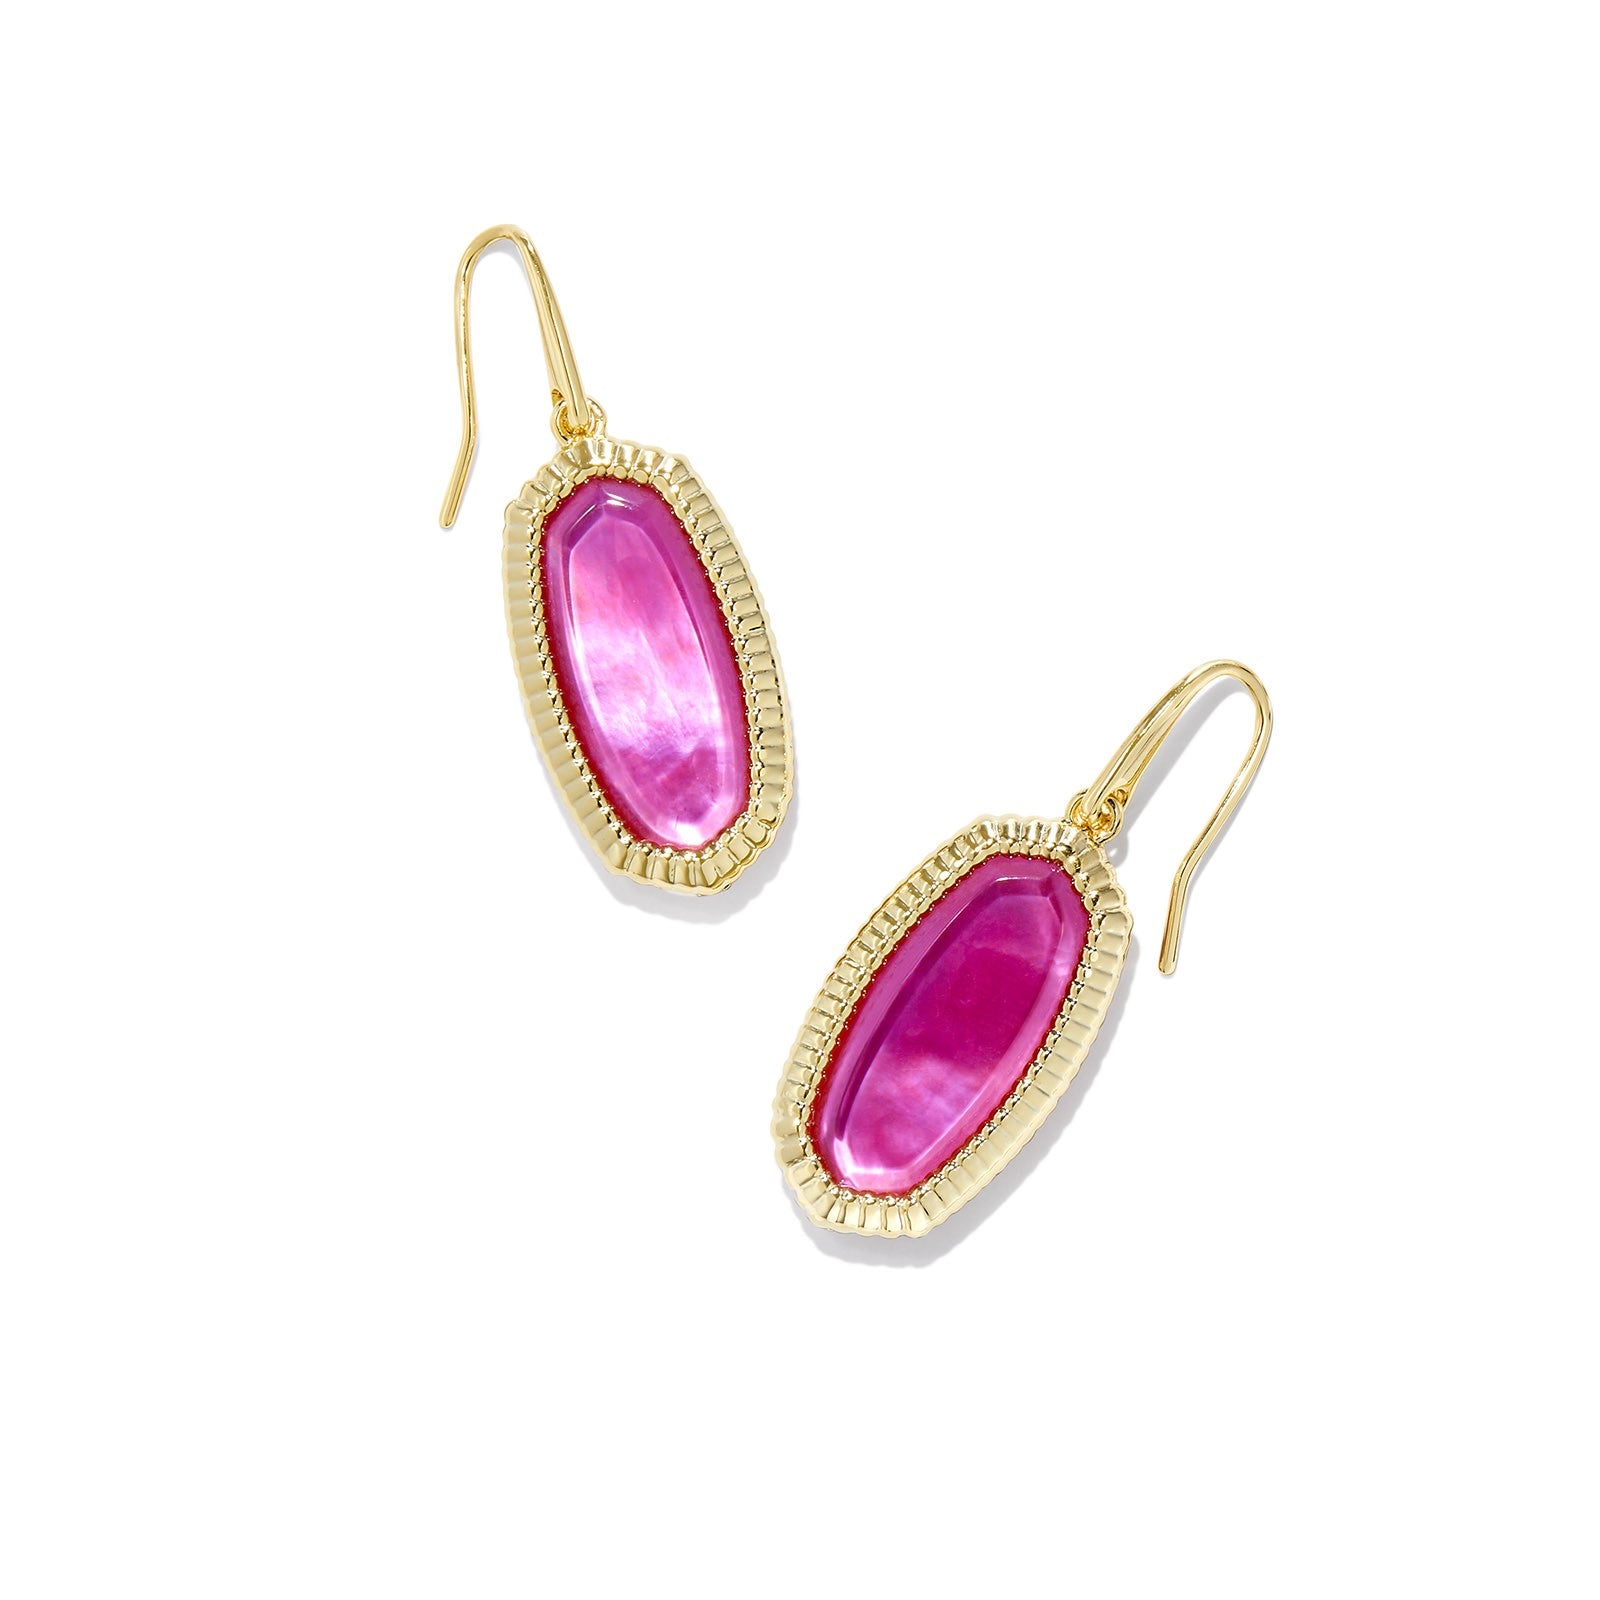 Kendra Scott | Dani Gold Ridge Frame Drop Earrings in Azalea Illusion - Giddy Up Glamour Boutique